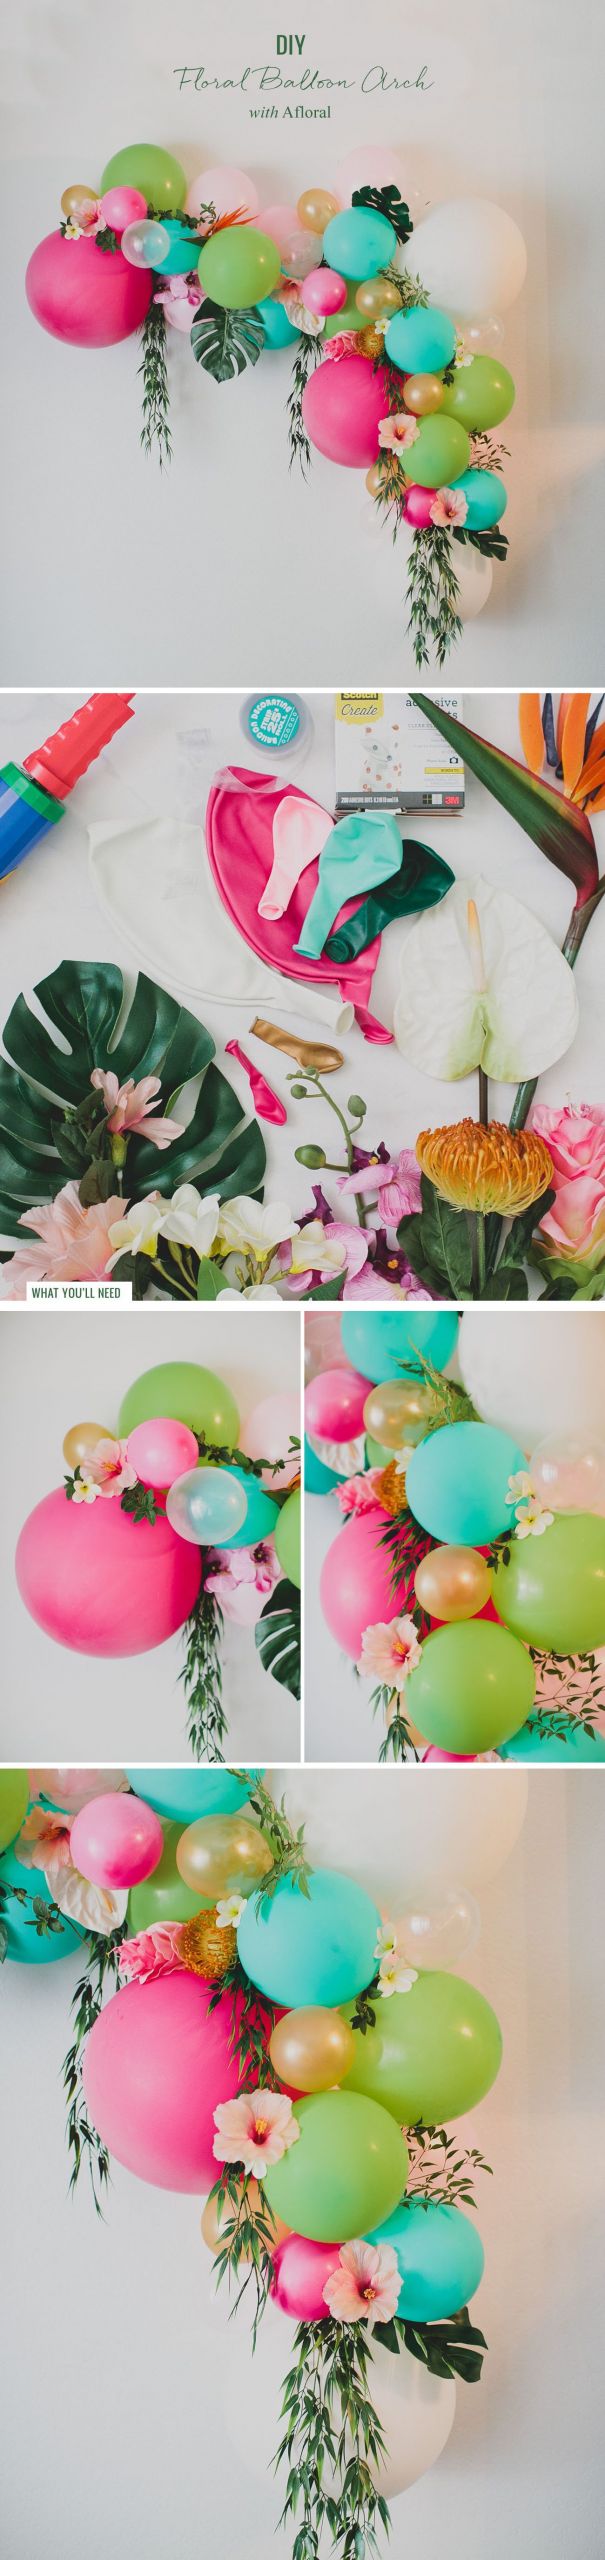 Moana DIY Decorations
 DIY Floral Balloon Arch Moana